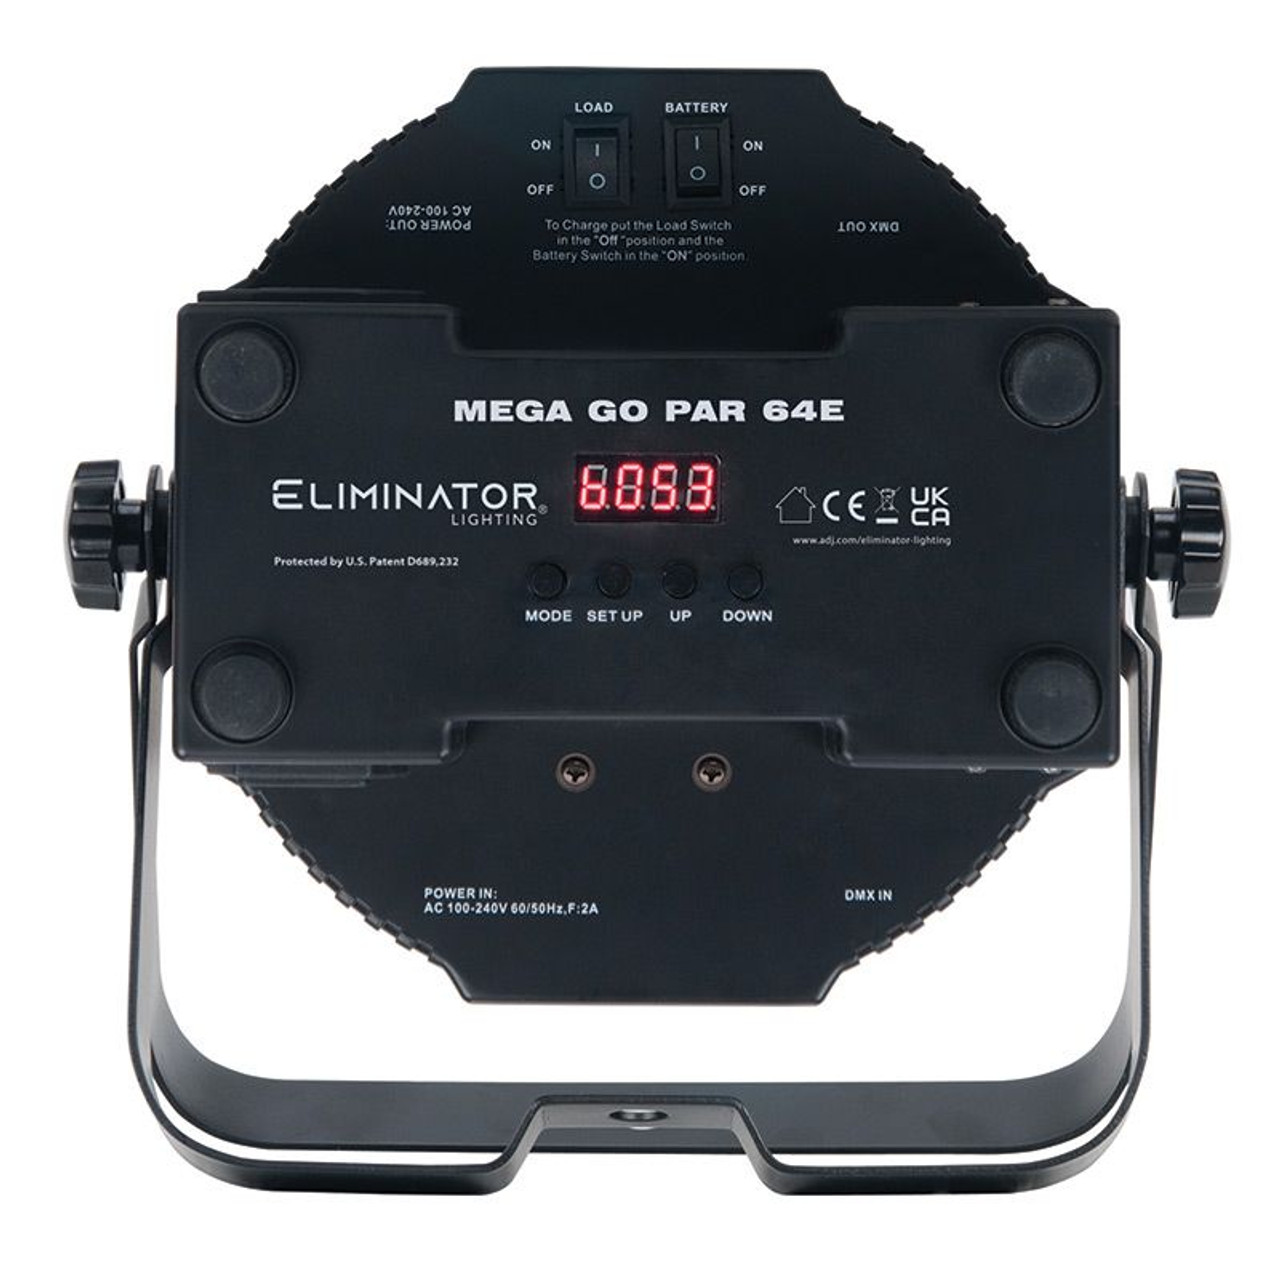 Eliminator Lighting MEGA Go Par 64E Battery-Powered RGB+UV LED Wash Light (MEGA GO PAR 64E)